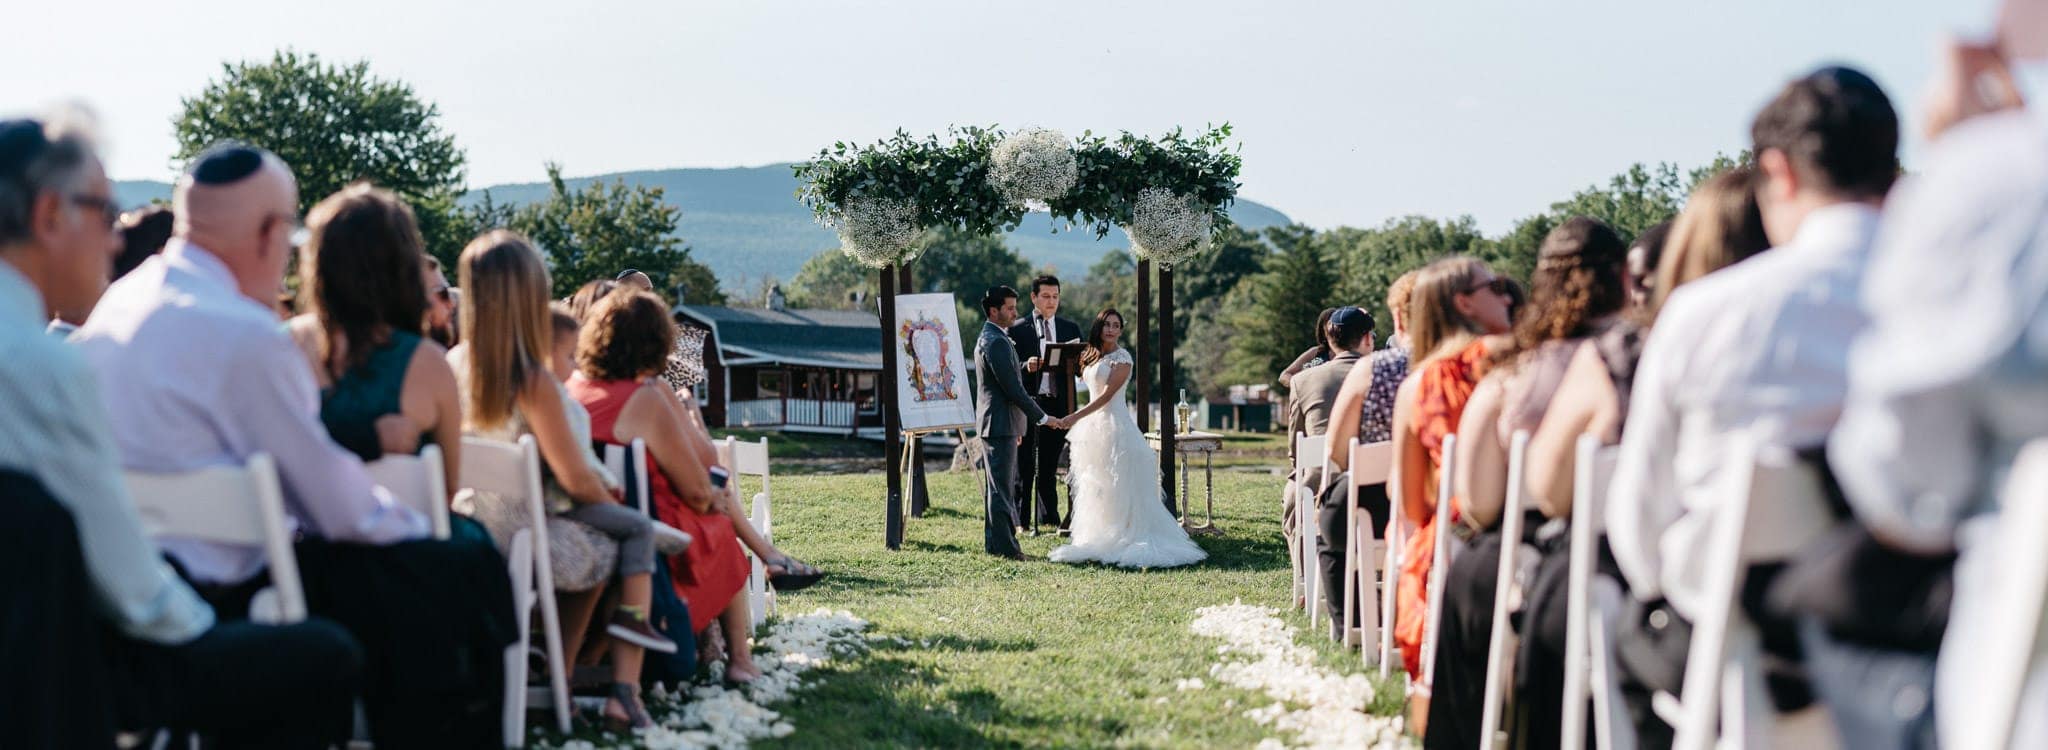 the-kaaterskill-wedding-photos-36